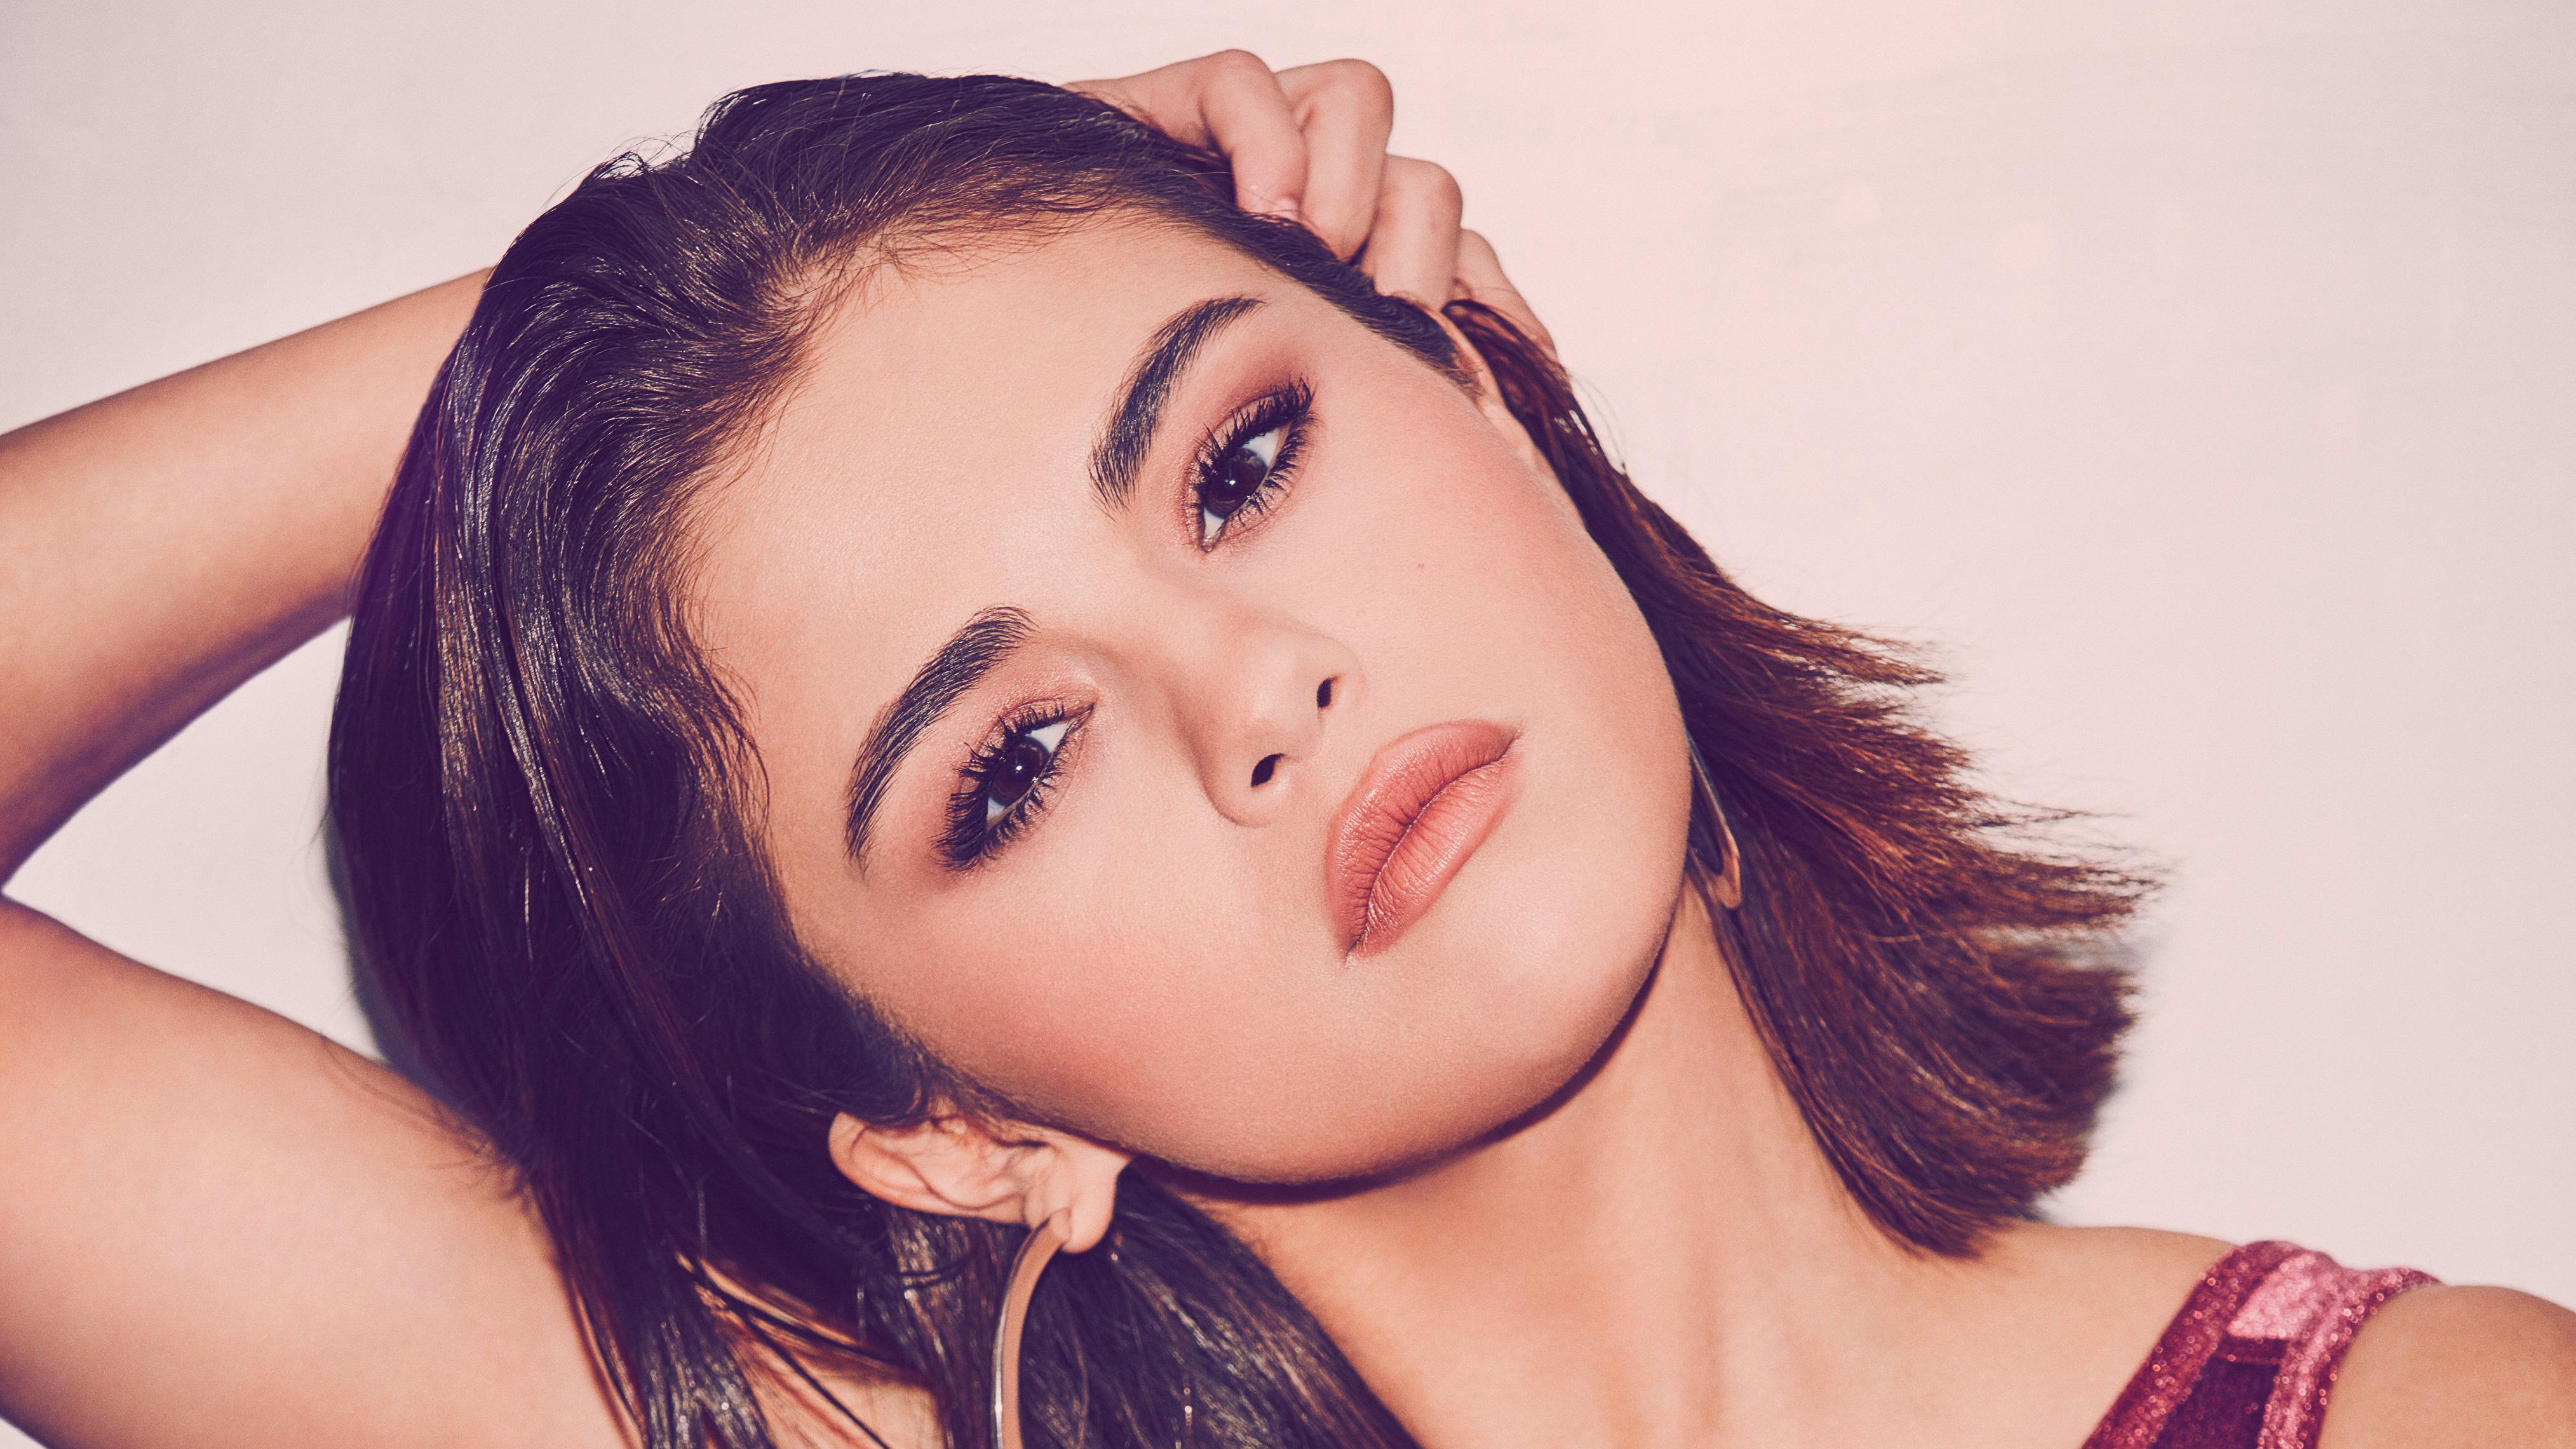 Selena Gomez Puma Photohoot 4k, HD Celebrities, 4k